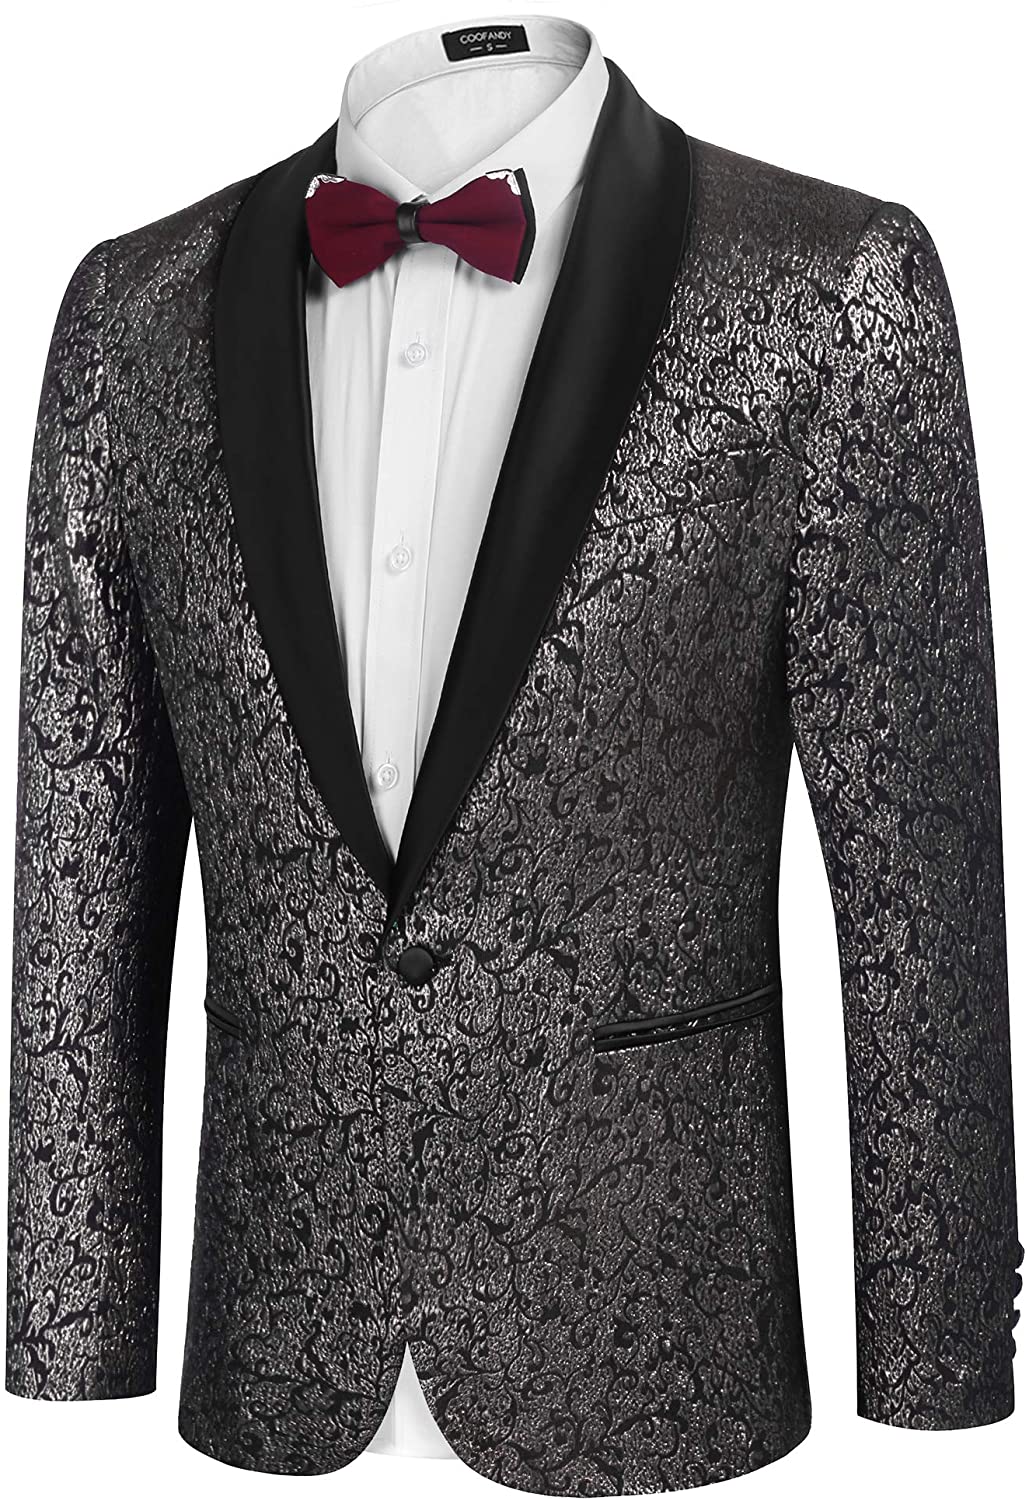 COOFANDY Men's Floral Suit Jacket One Button Stylish Jacquard Dinner ...